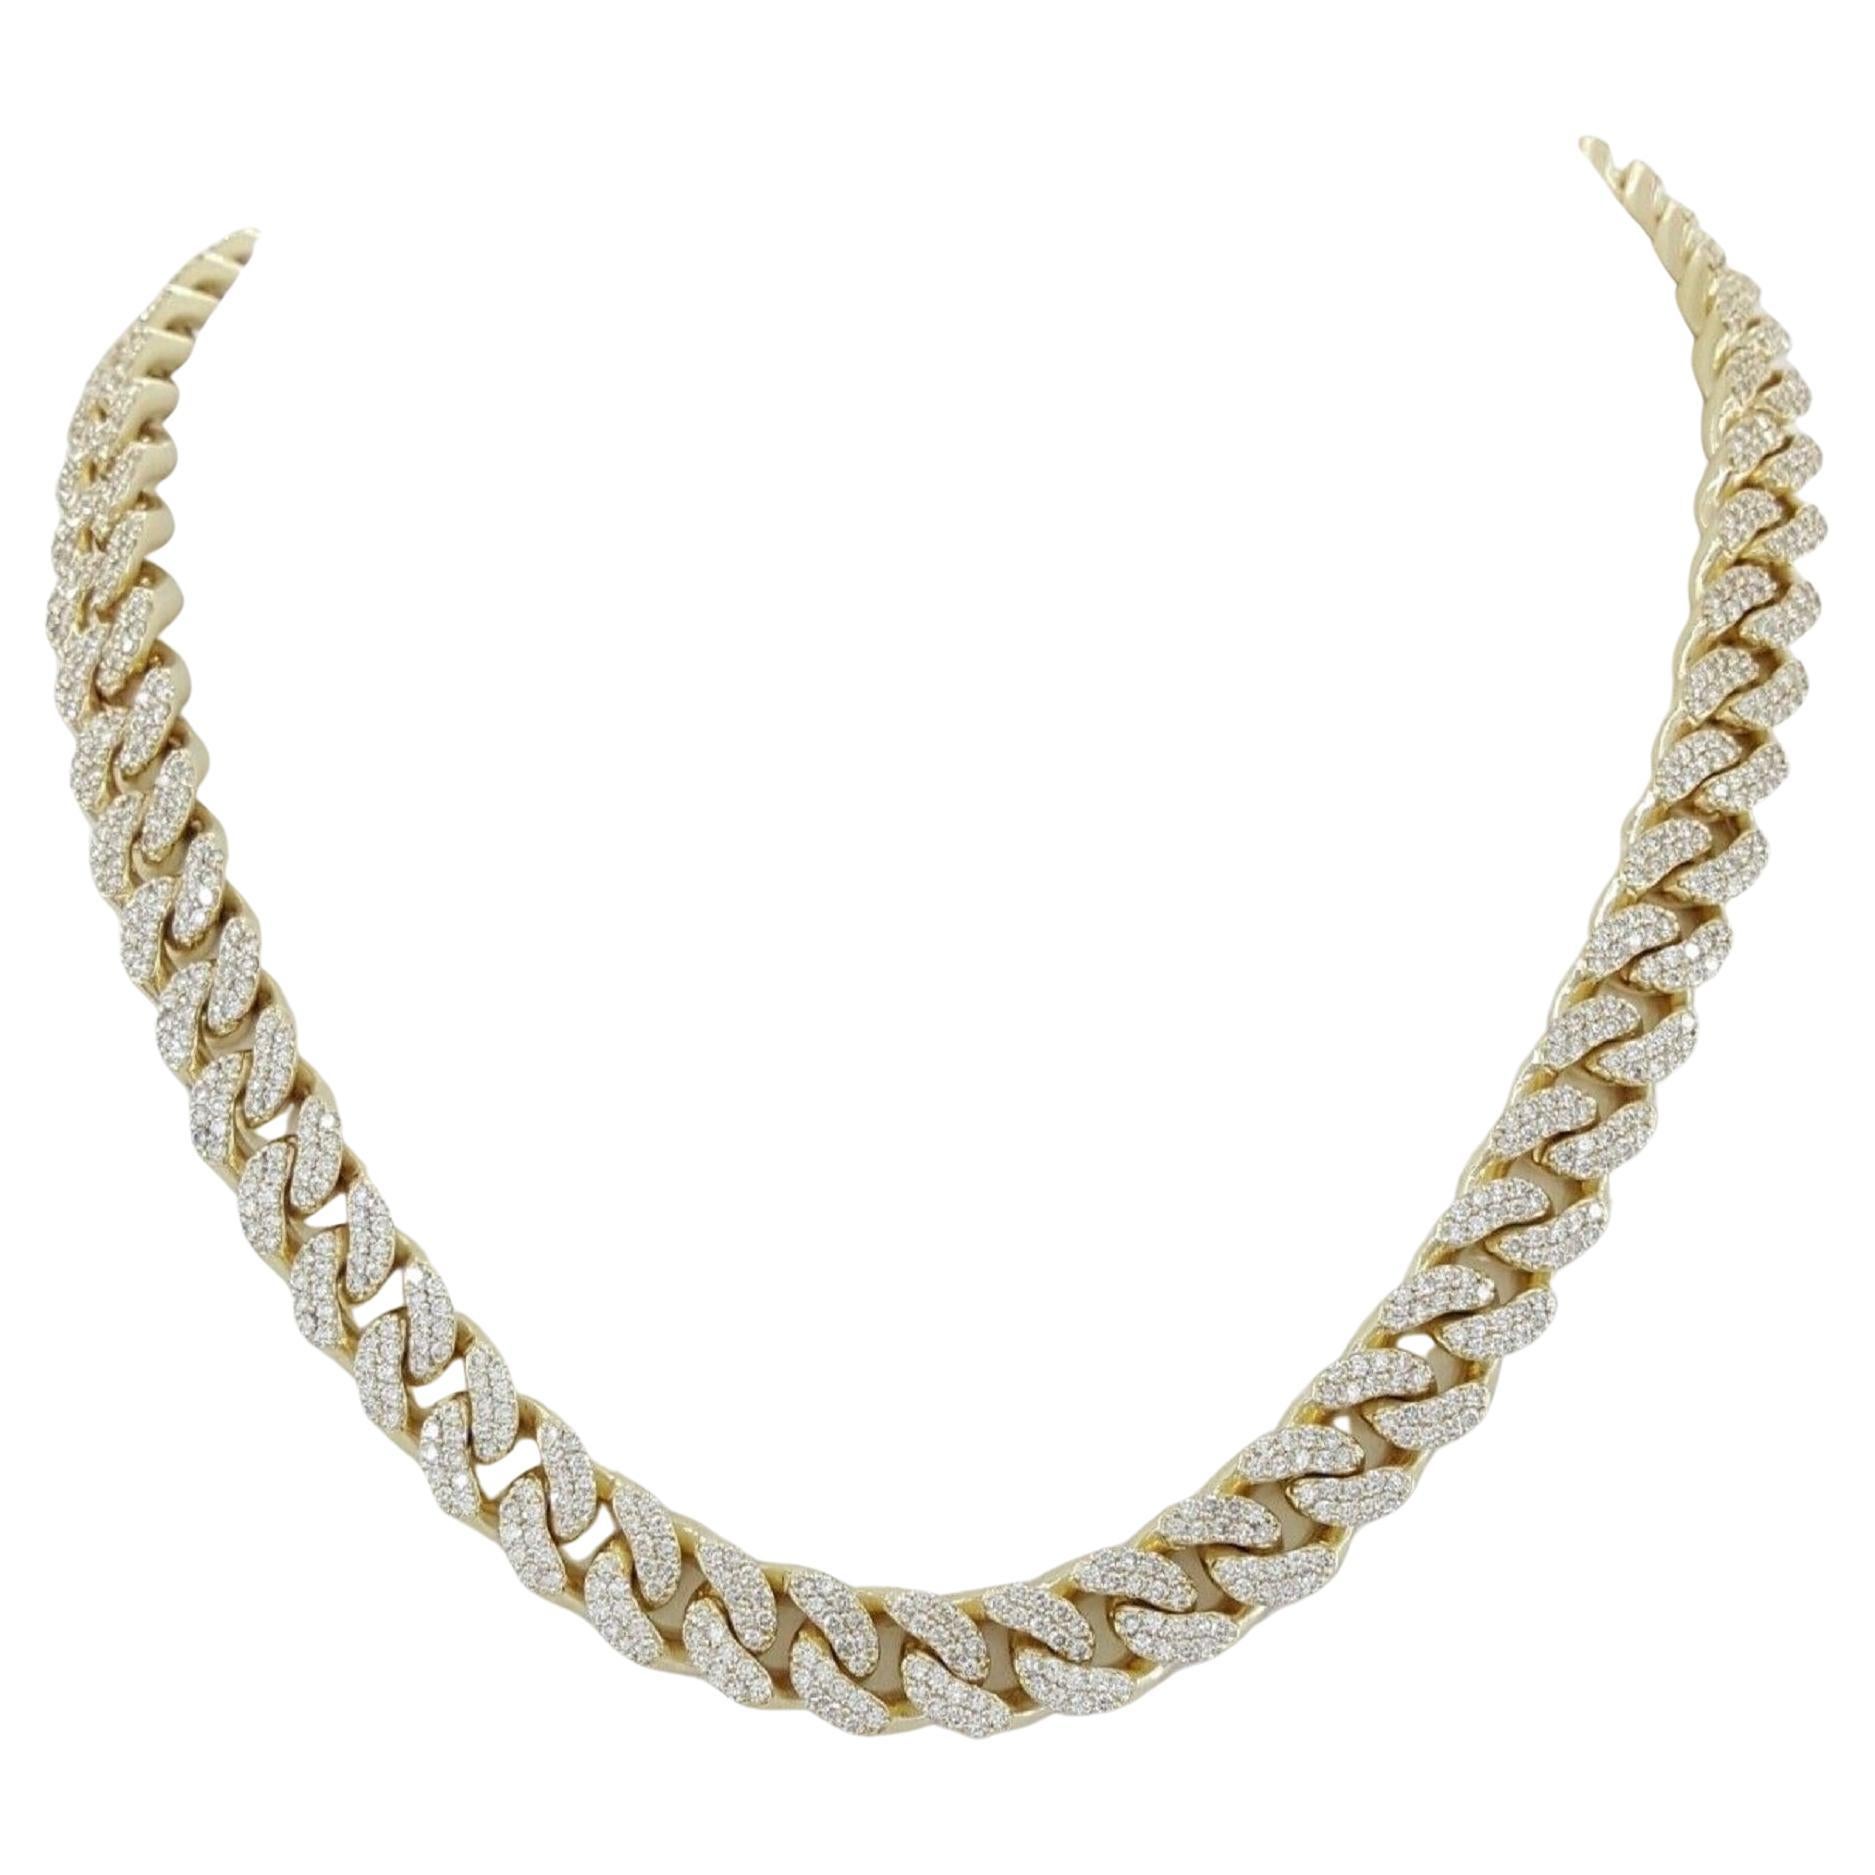 13 Carat Round Brilliant Cut Diamonds Solid Cuban Link Chain Necklace